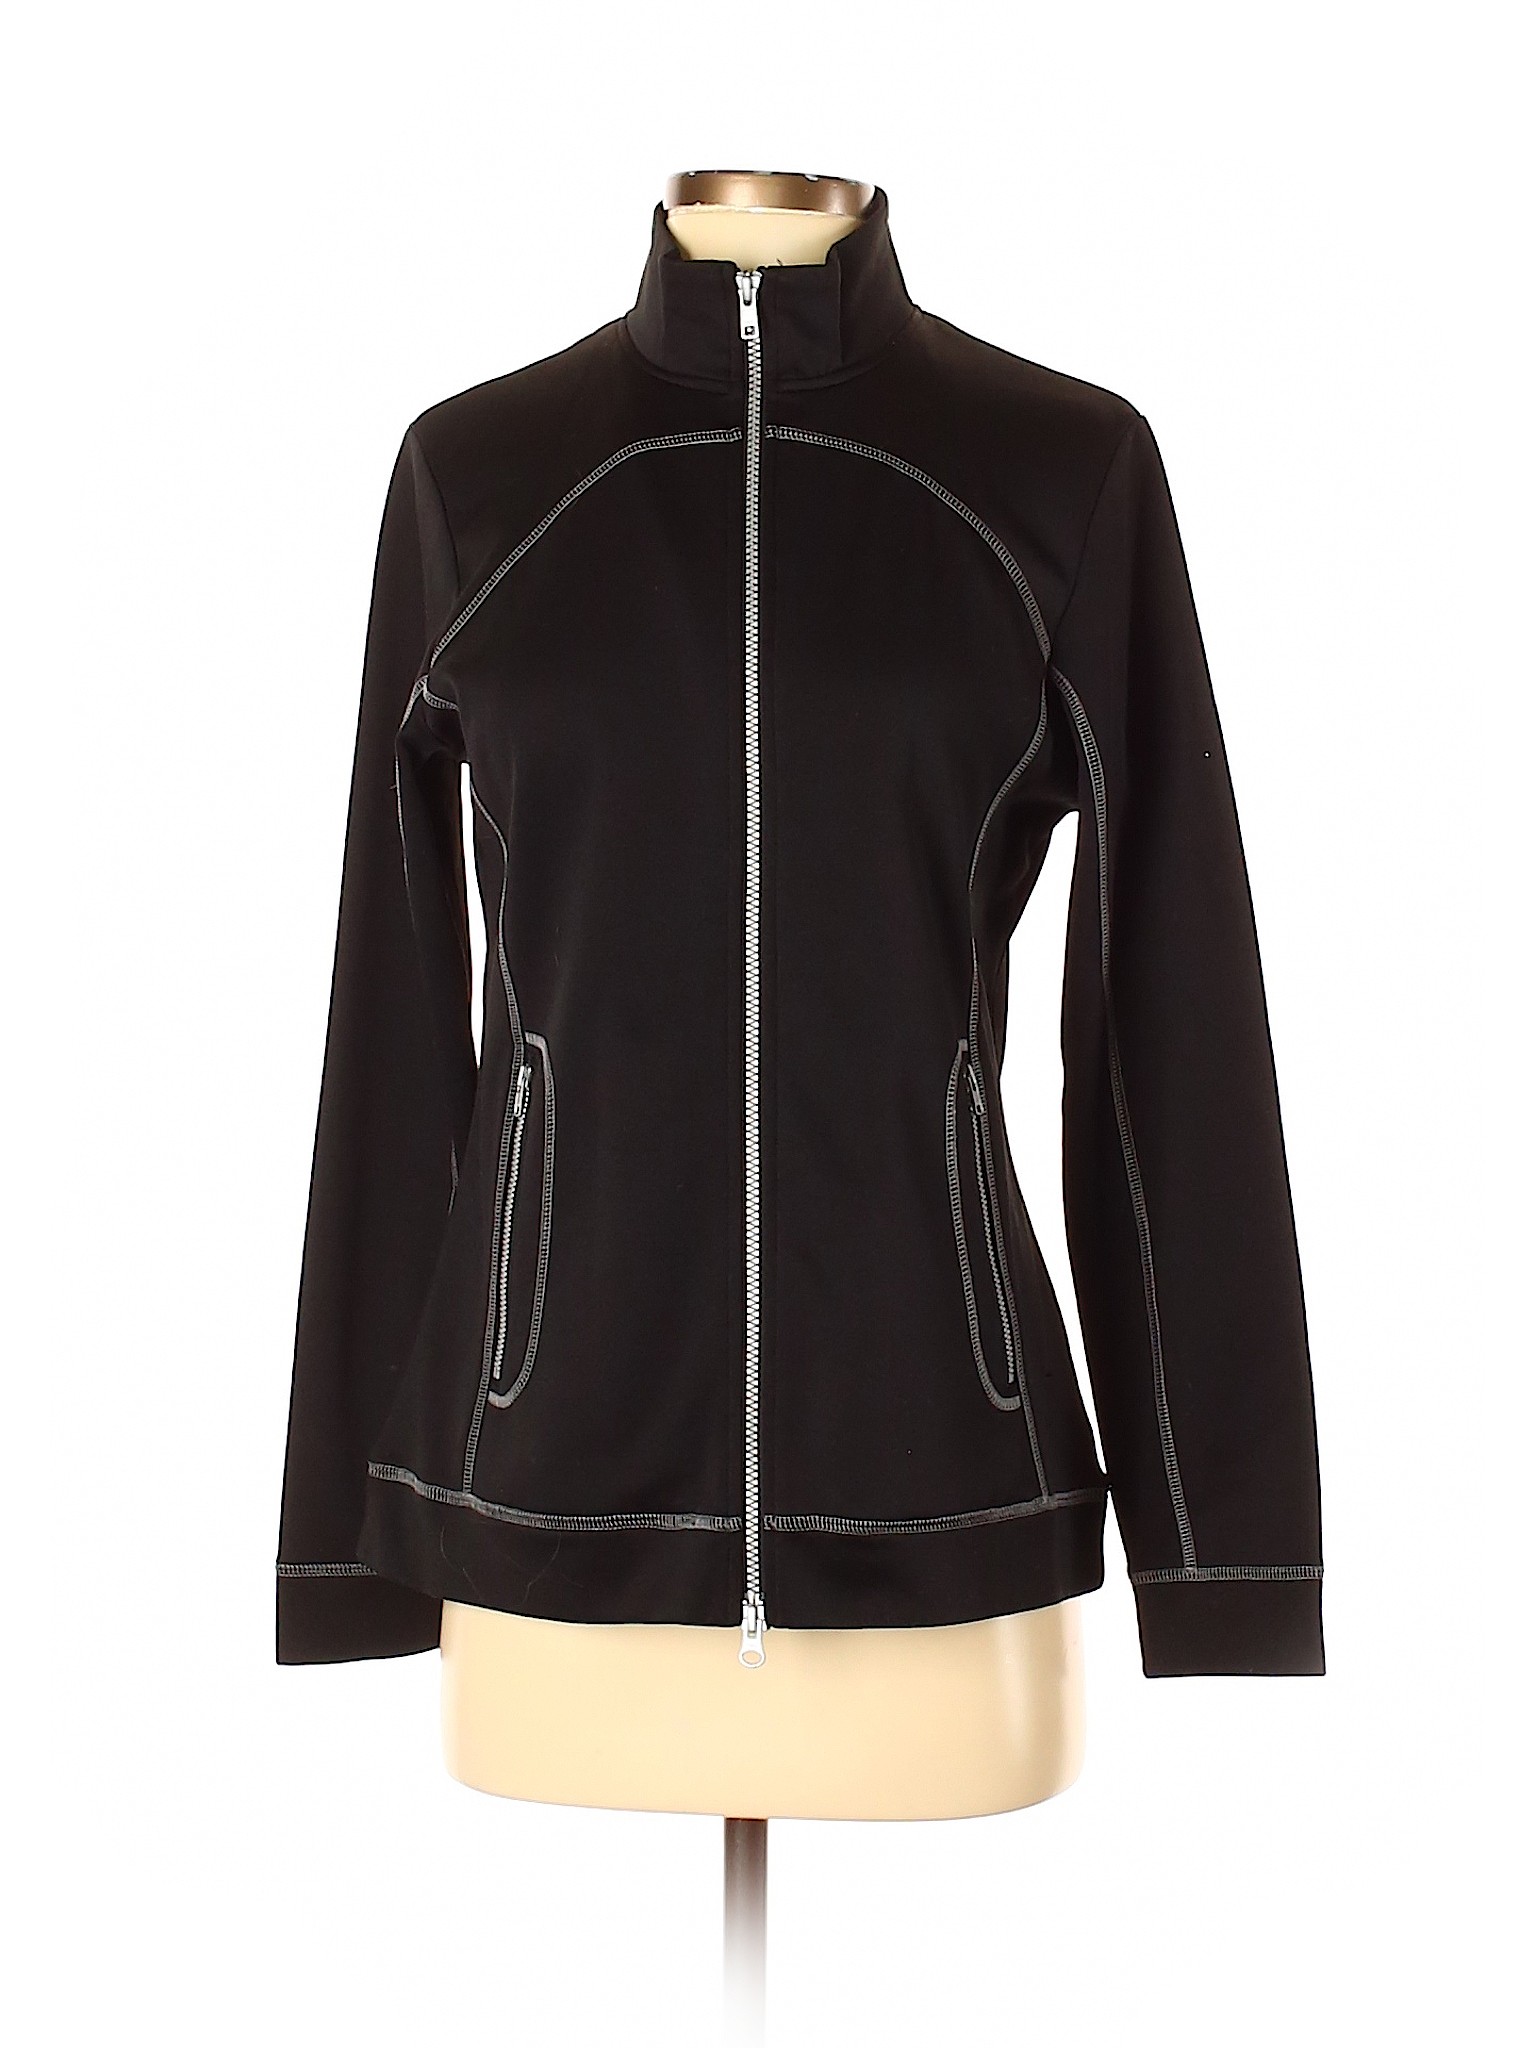 Clique Women Black Jacket S Petites | eBay